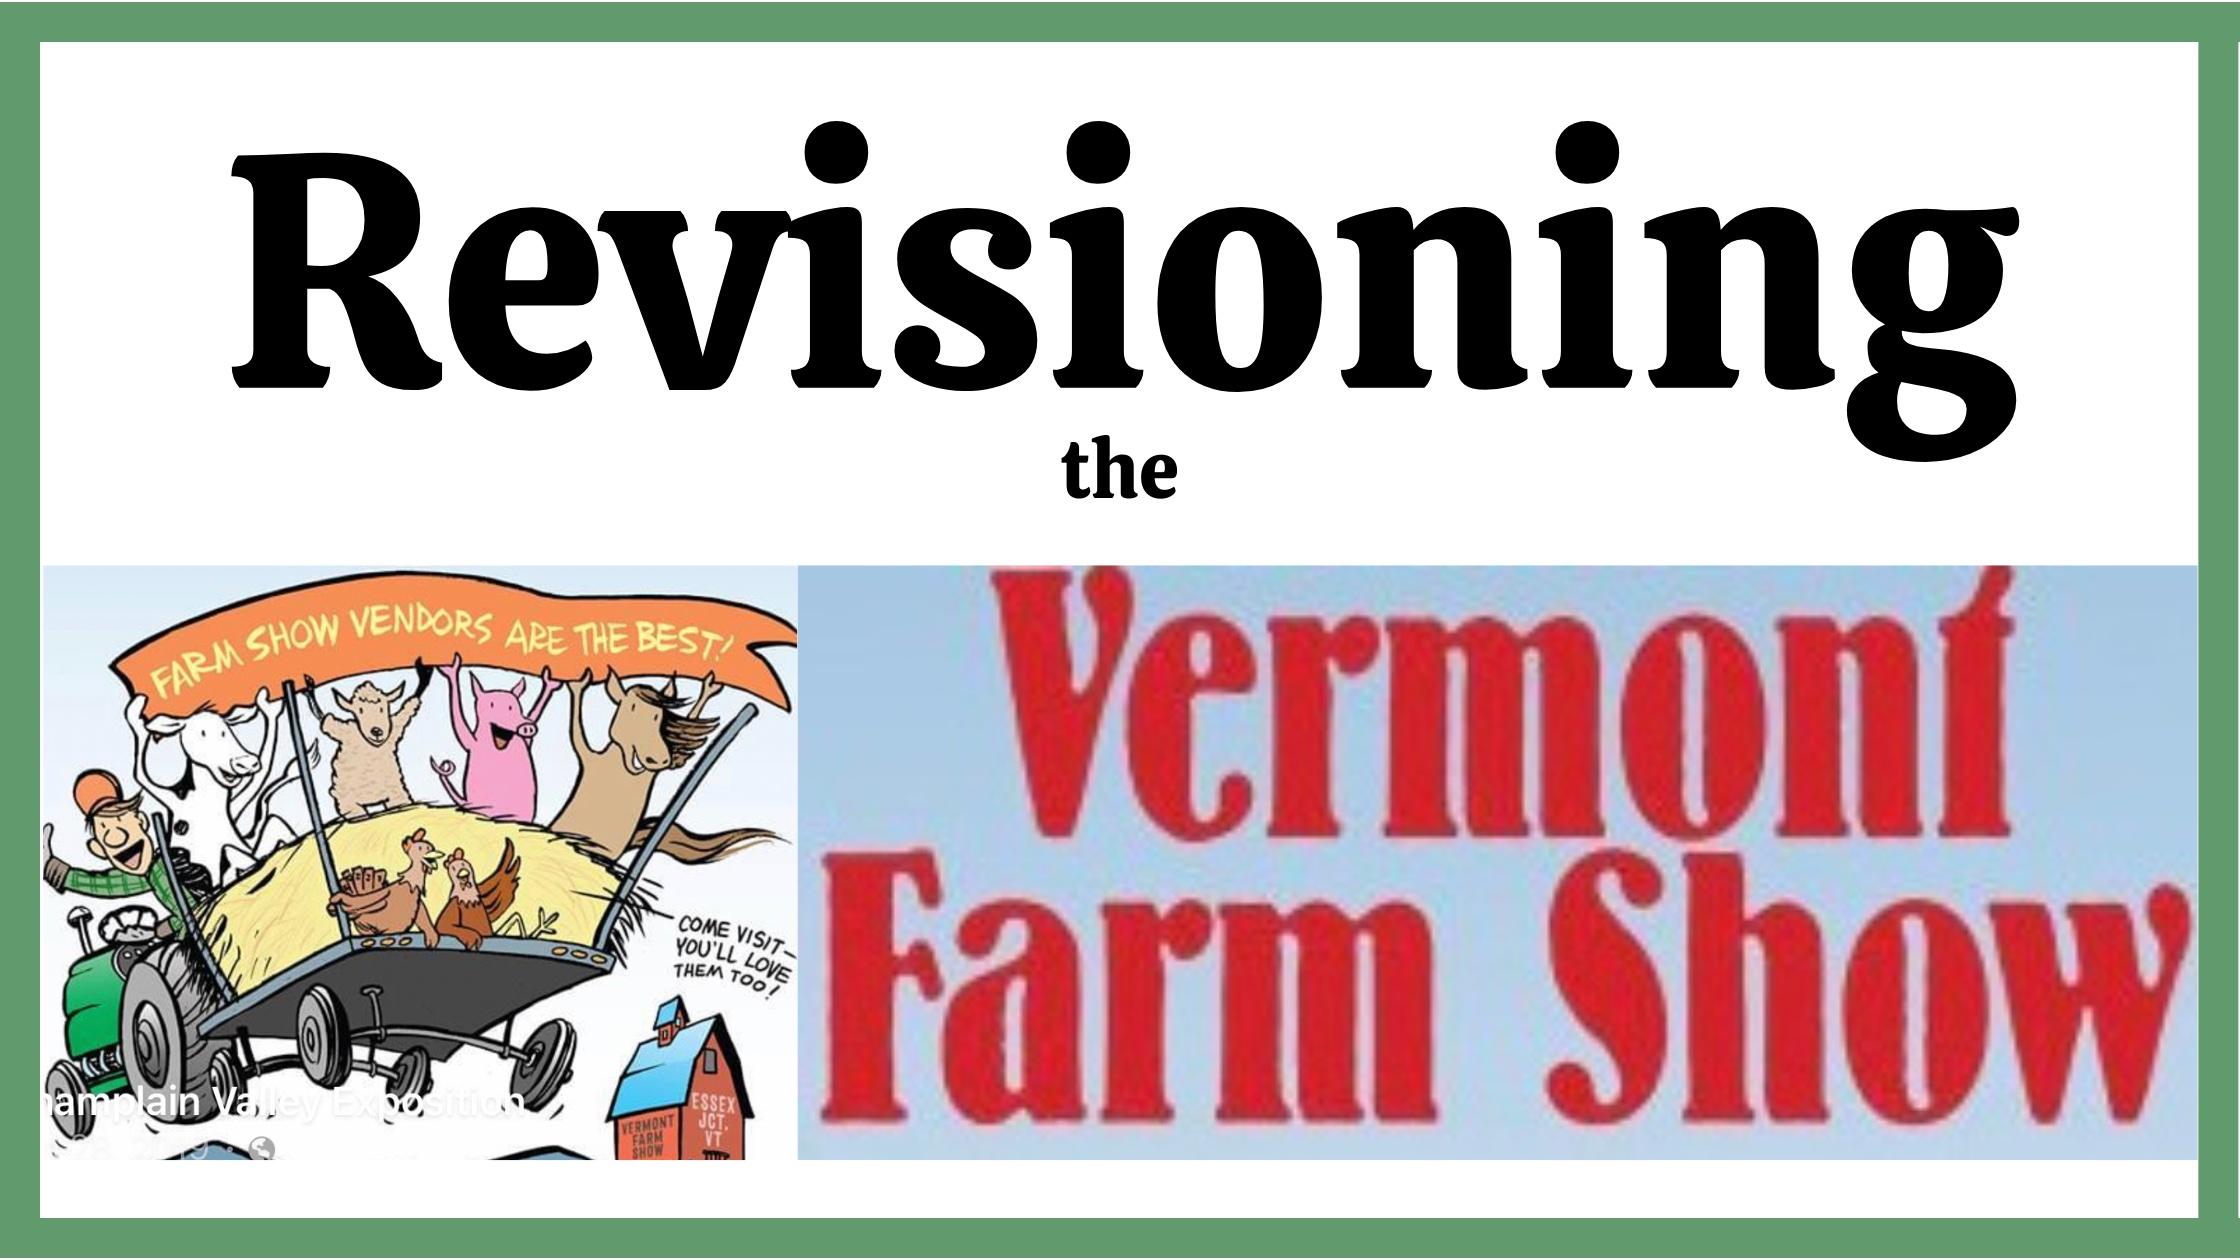 vermont farm show revisioning